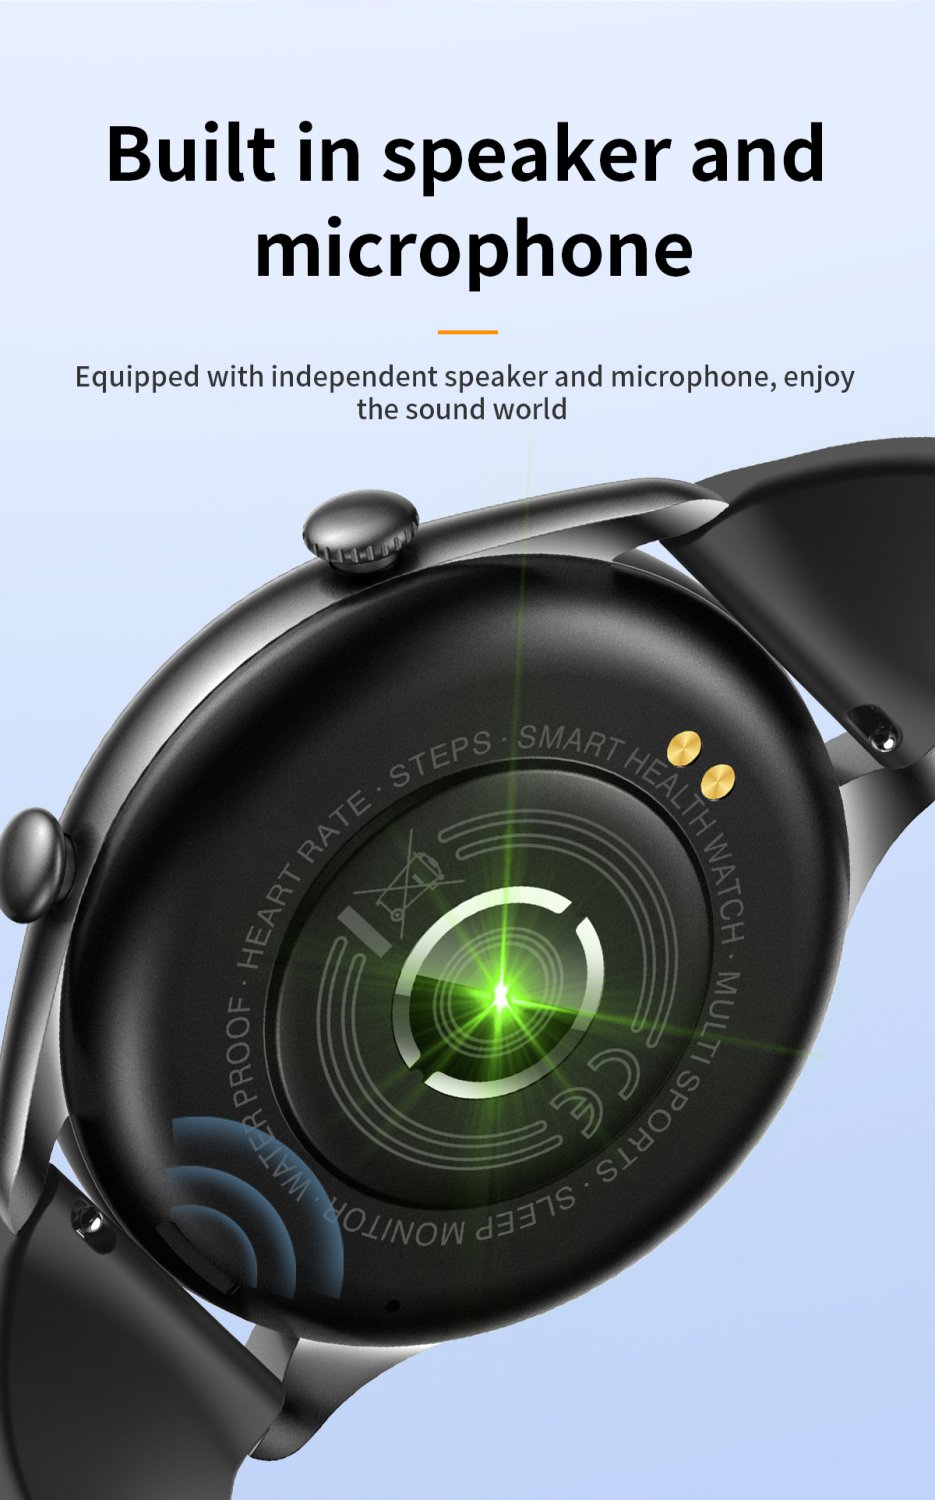 Zodvboz 1.32-inch KT60 Bluetooth Smart Watch Monitoring Health Bracelet (Silver Gray)